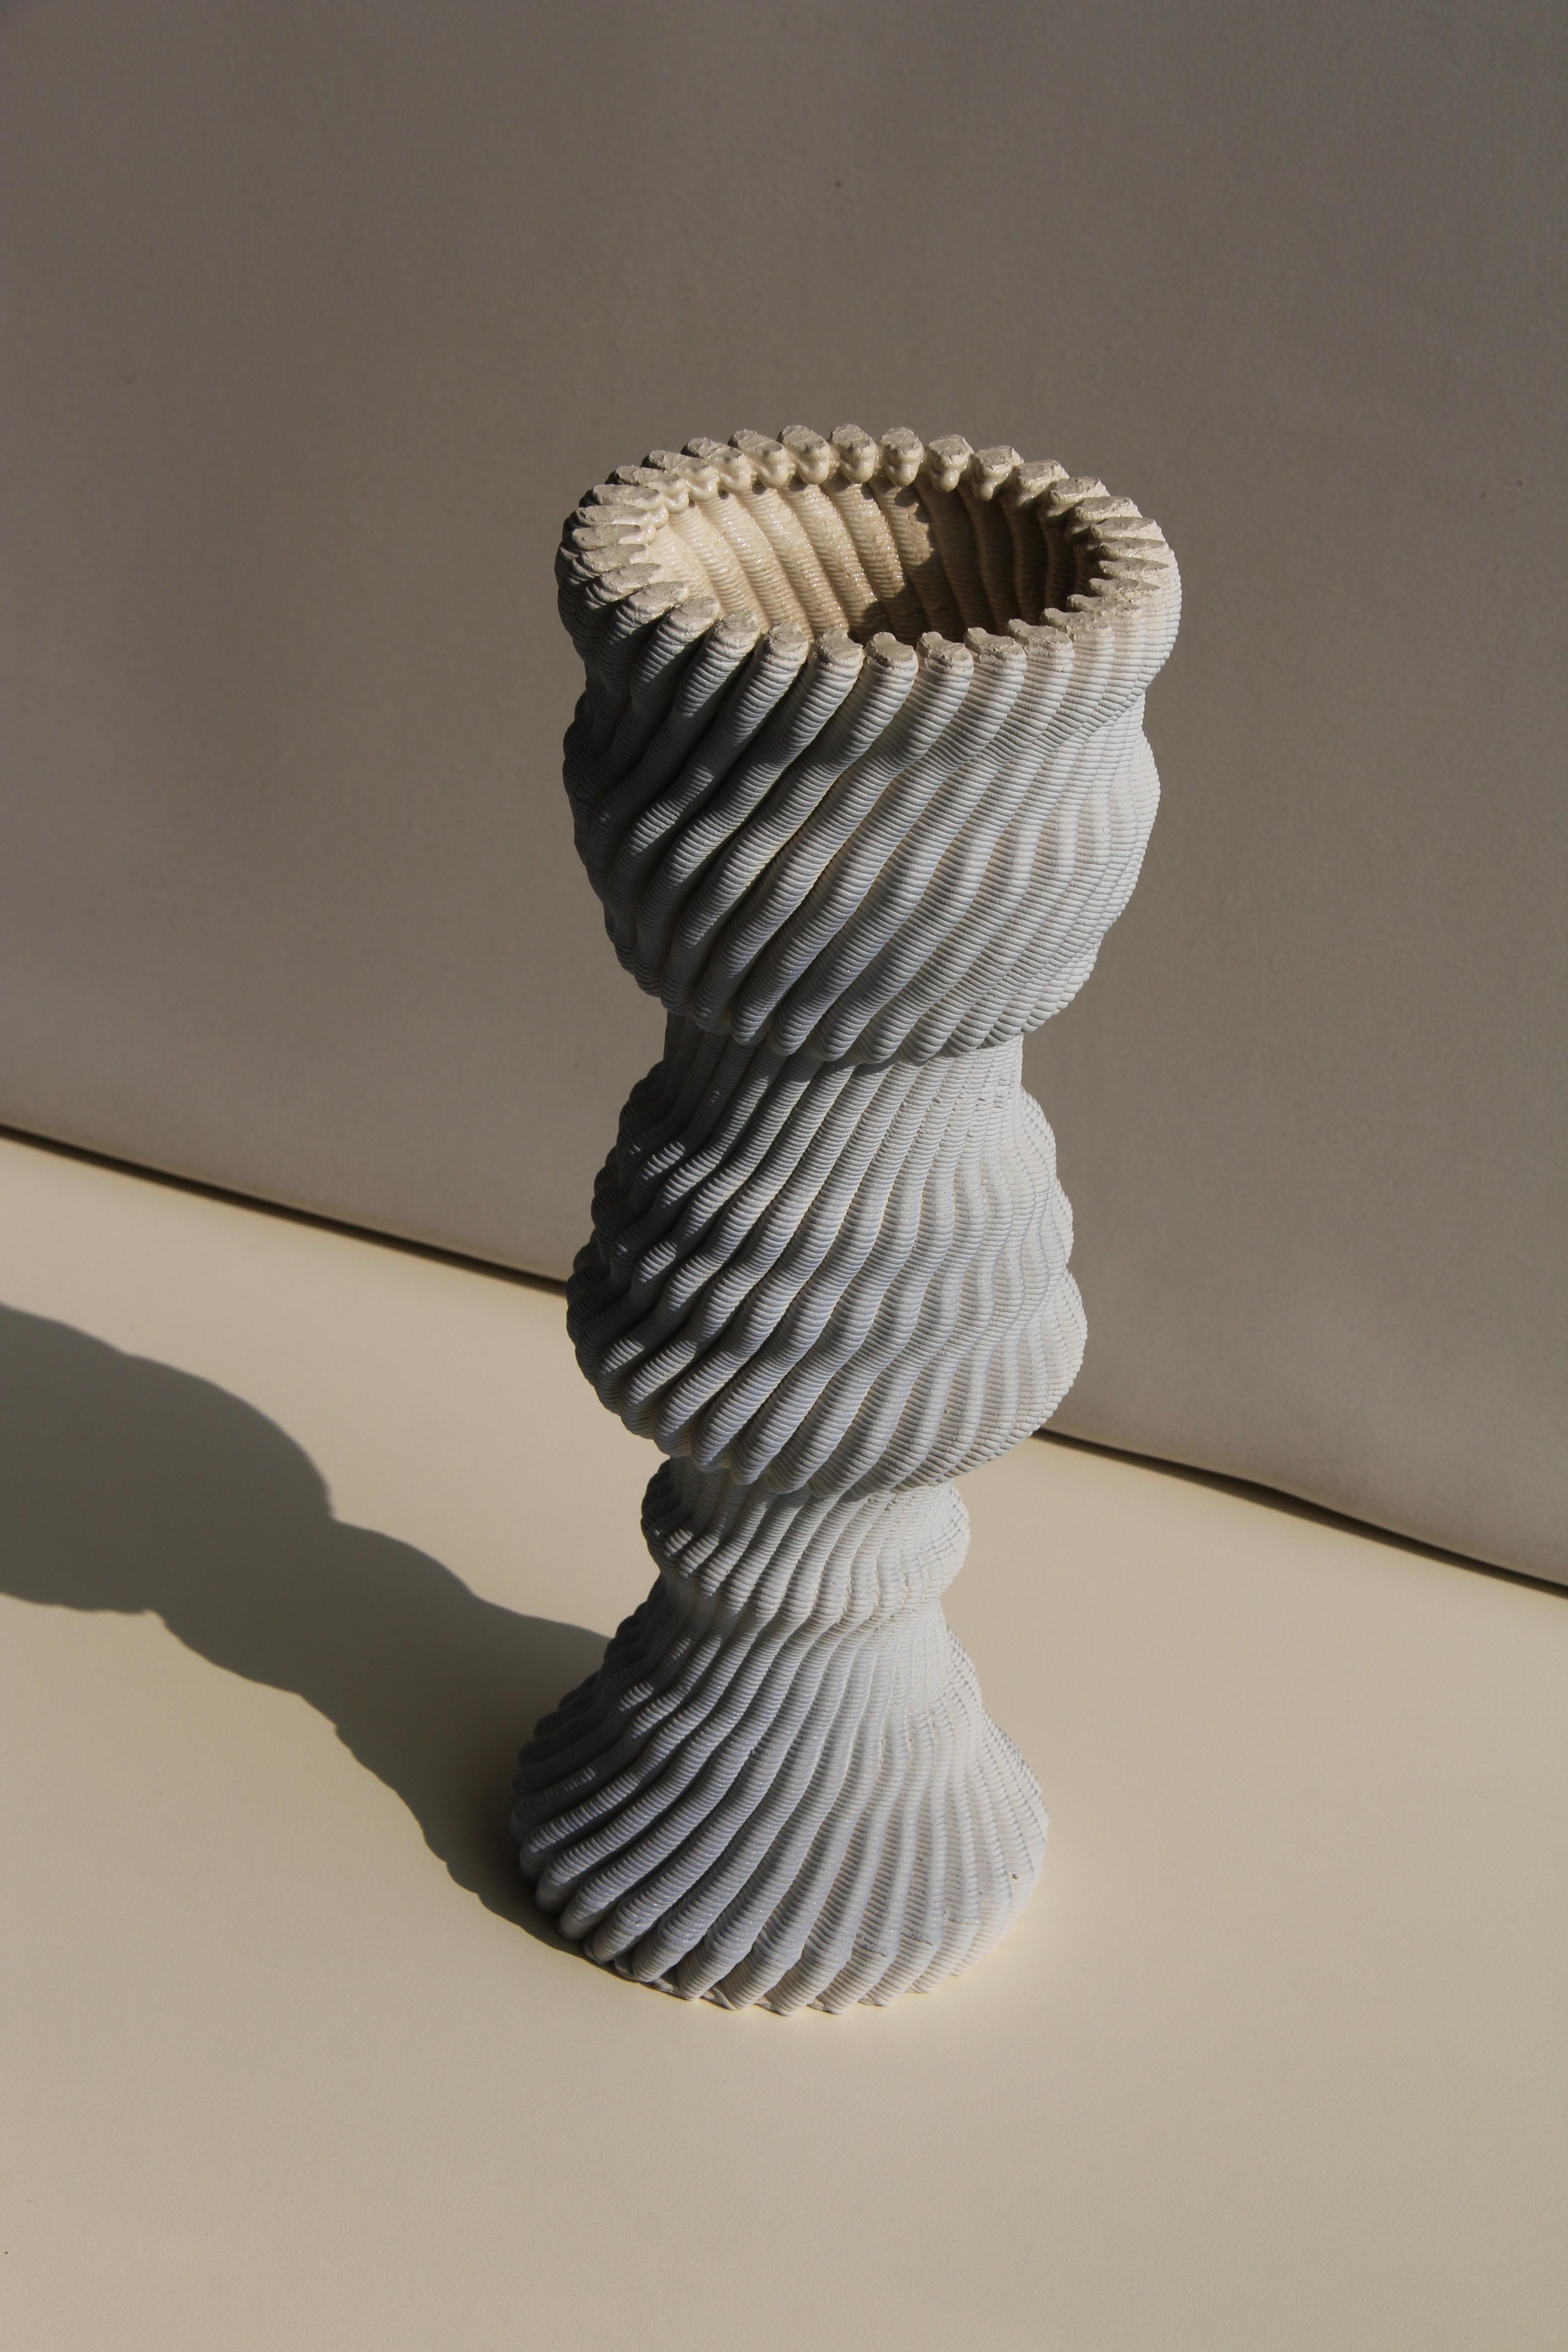 Glazed Gradient Blue 3D Printed Ceramic Tecla Vase Italy Contemporary 21st Century For Sale